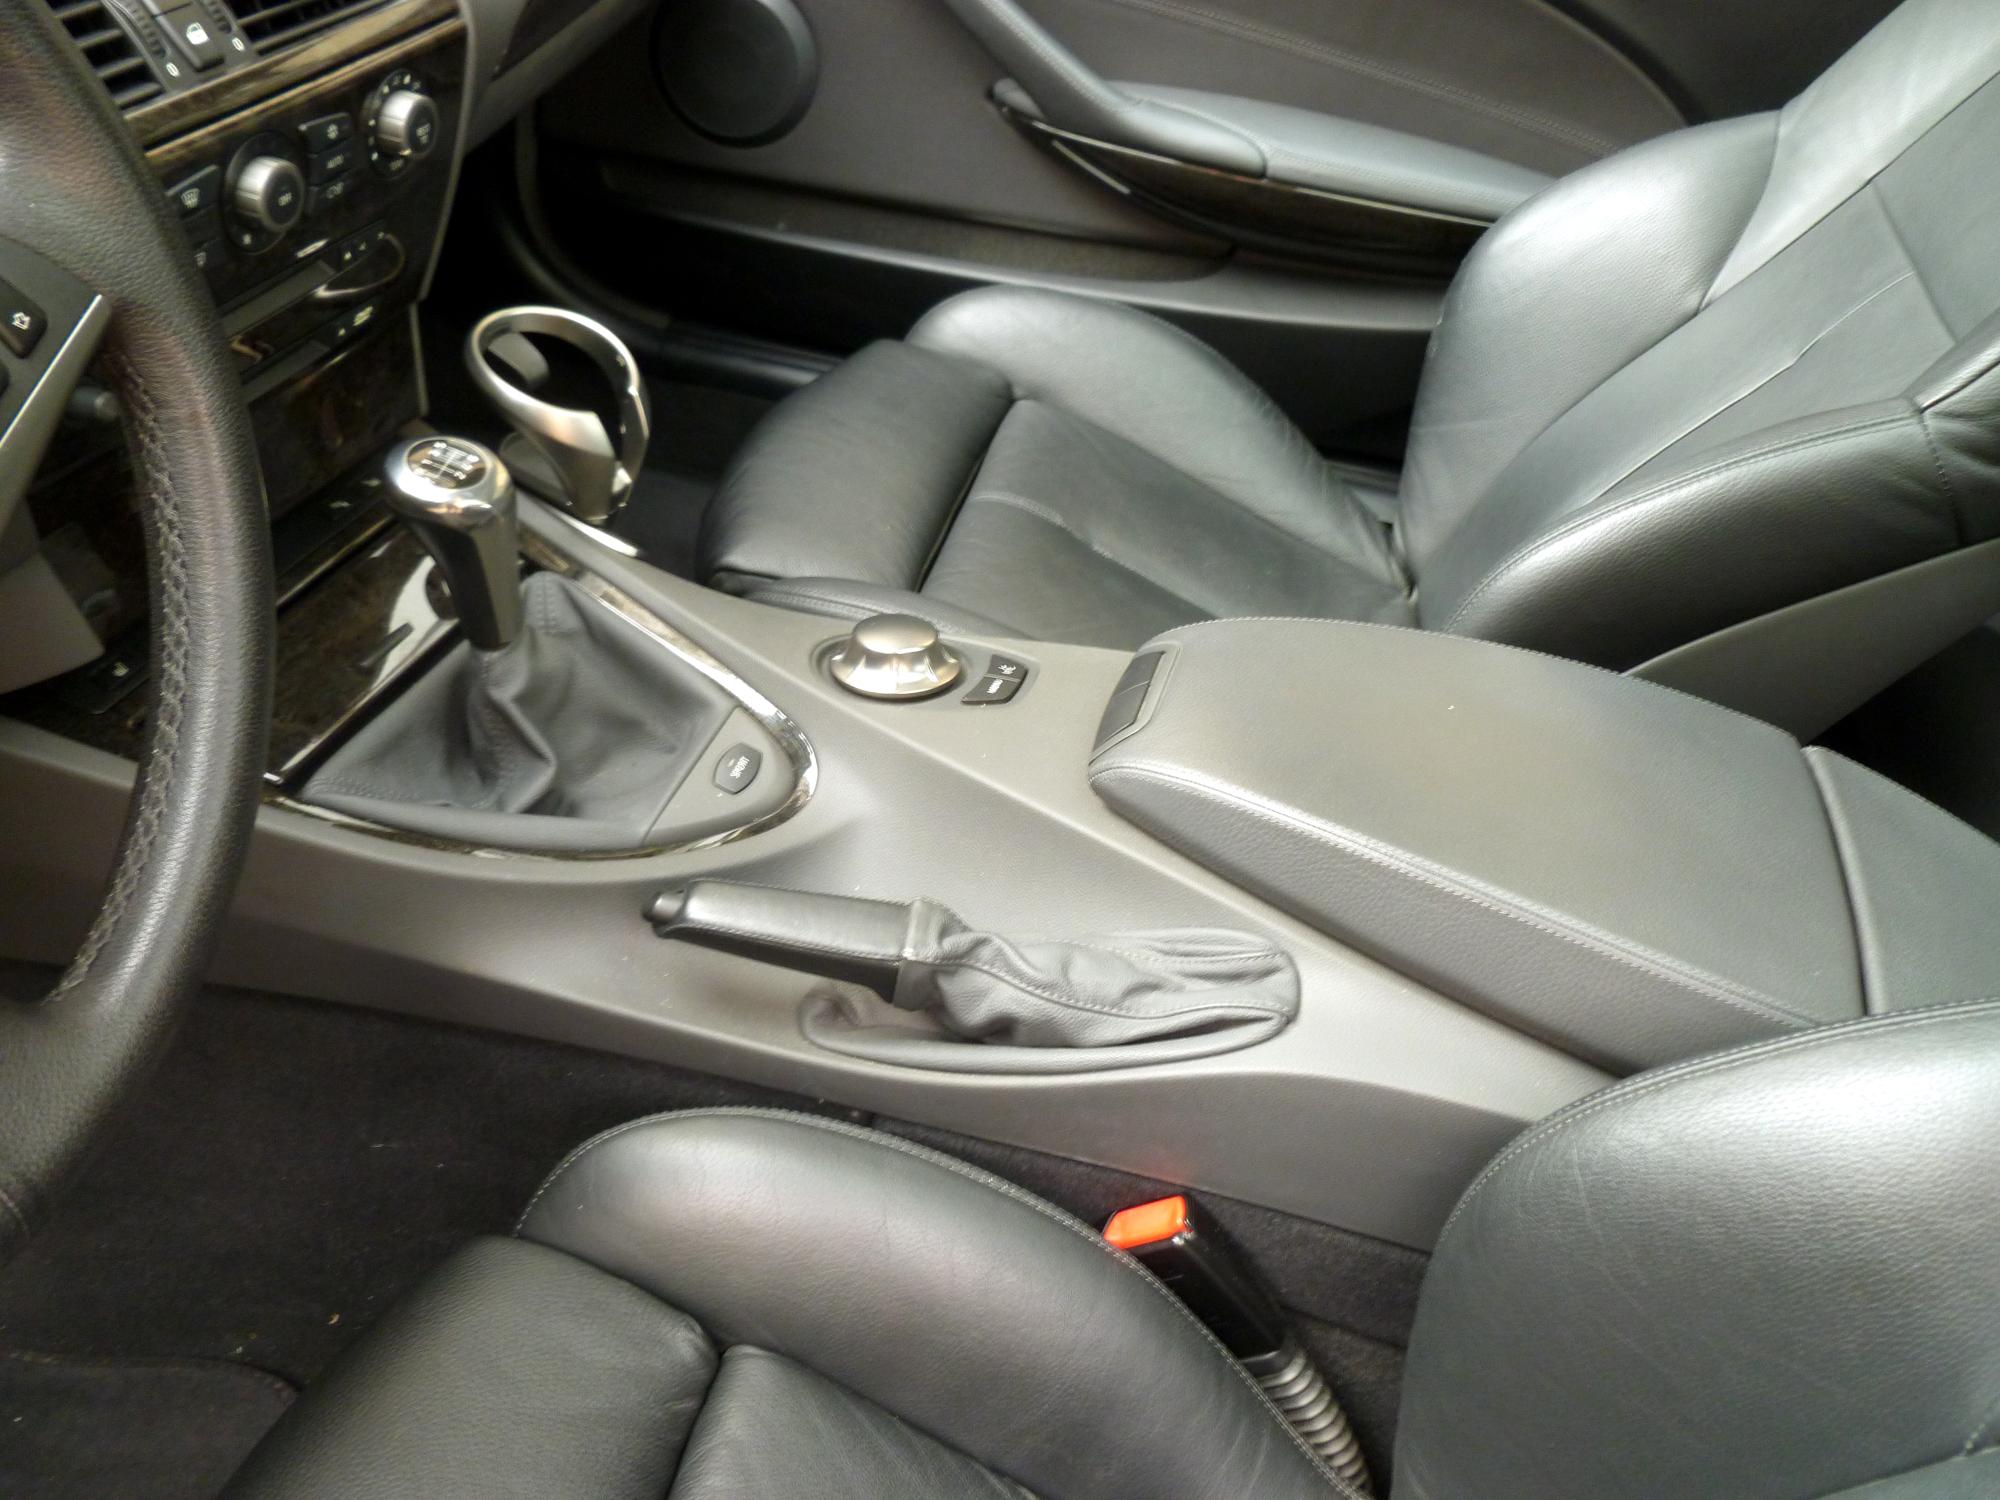 Vehicles - BMW 645ci Interior #3